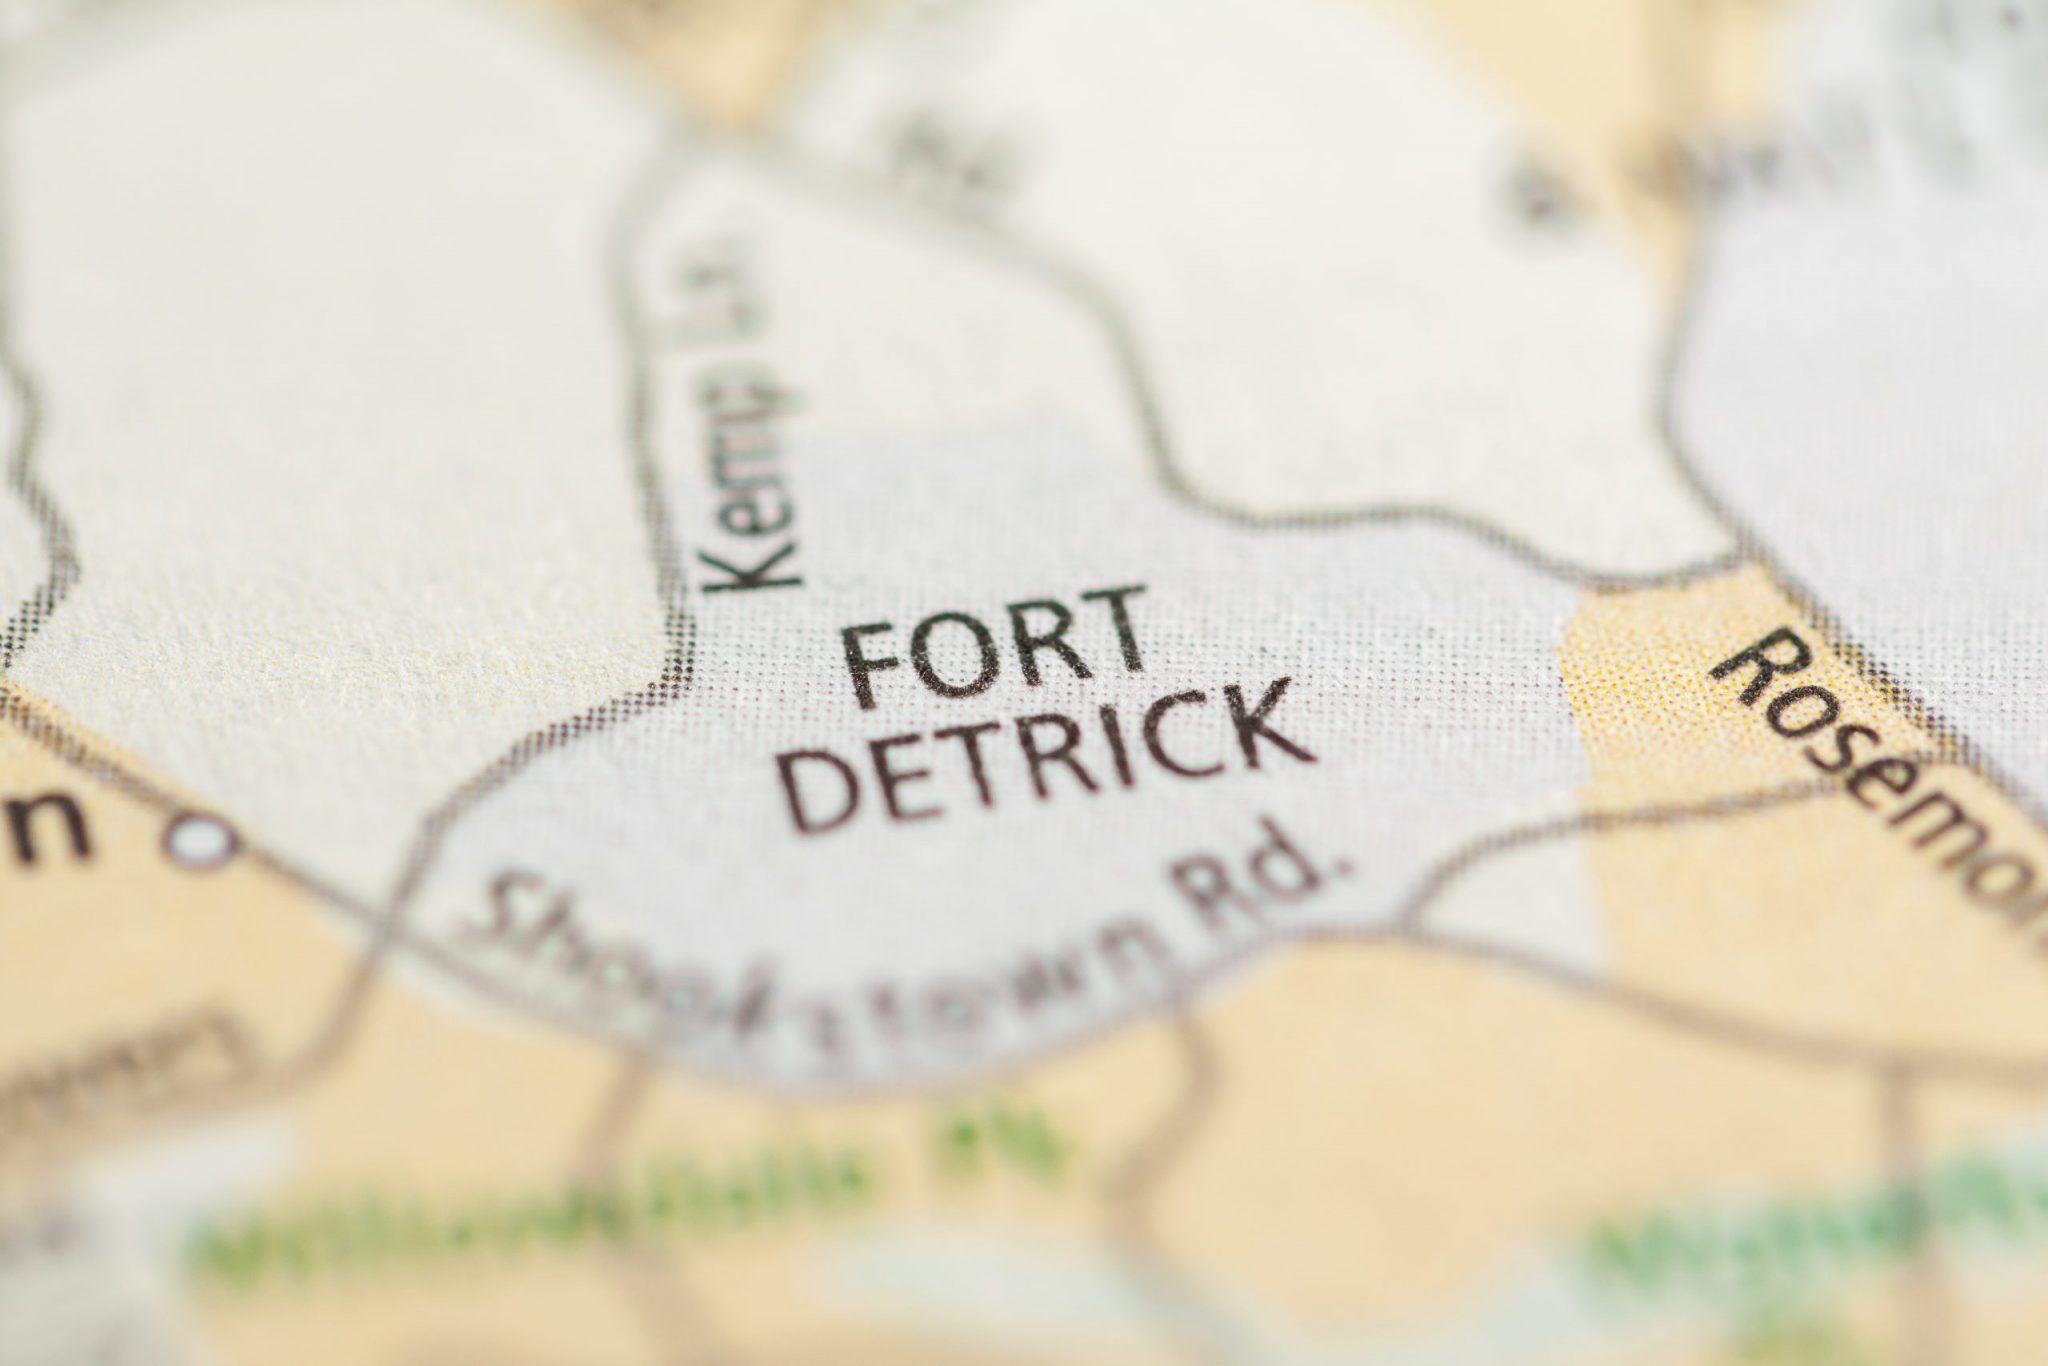 map showing Fort Detrick, Maryland